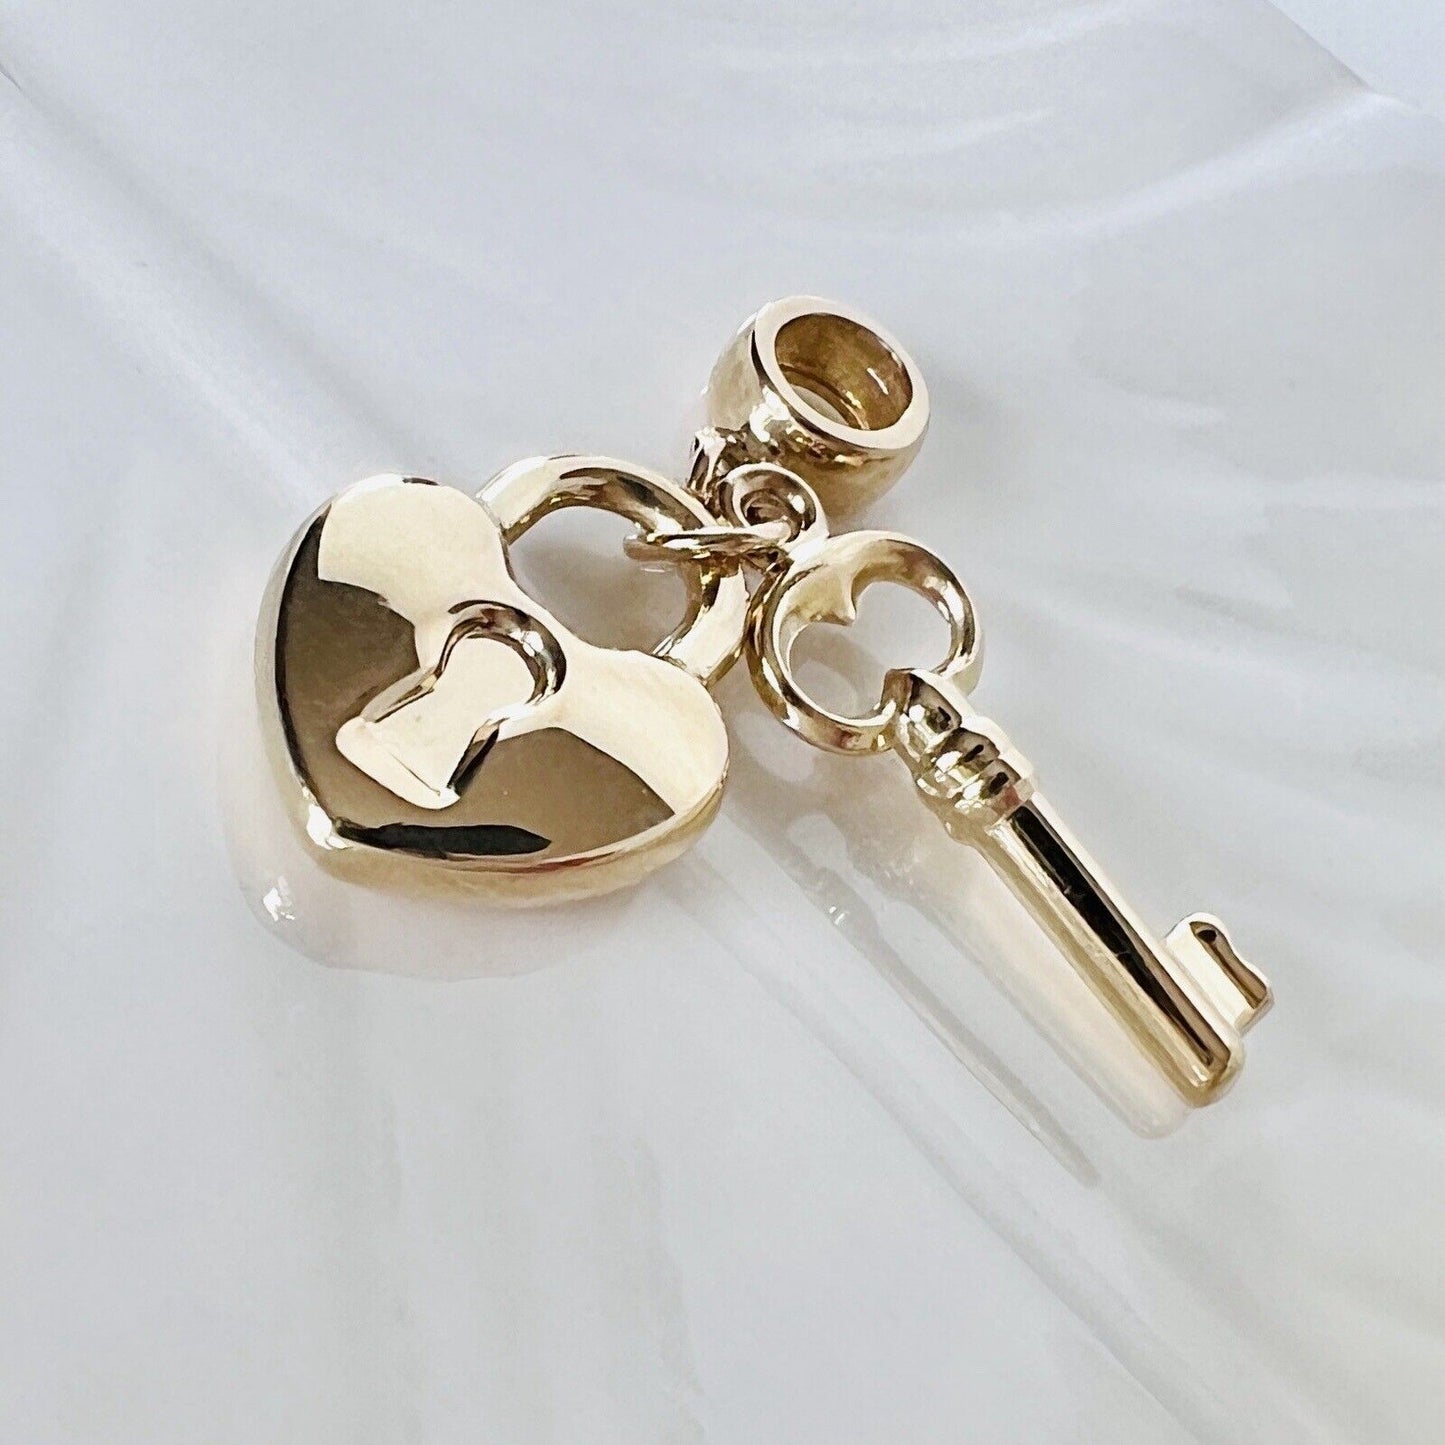 Solid 14k Yellow Gold Heart Lock & Key Charm for European Style Bracelets, New